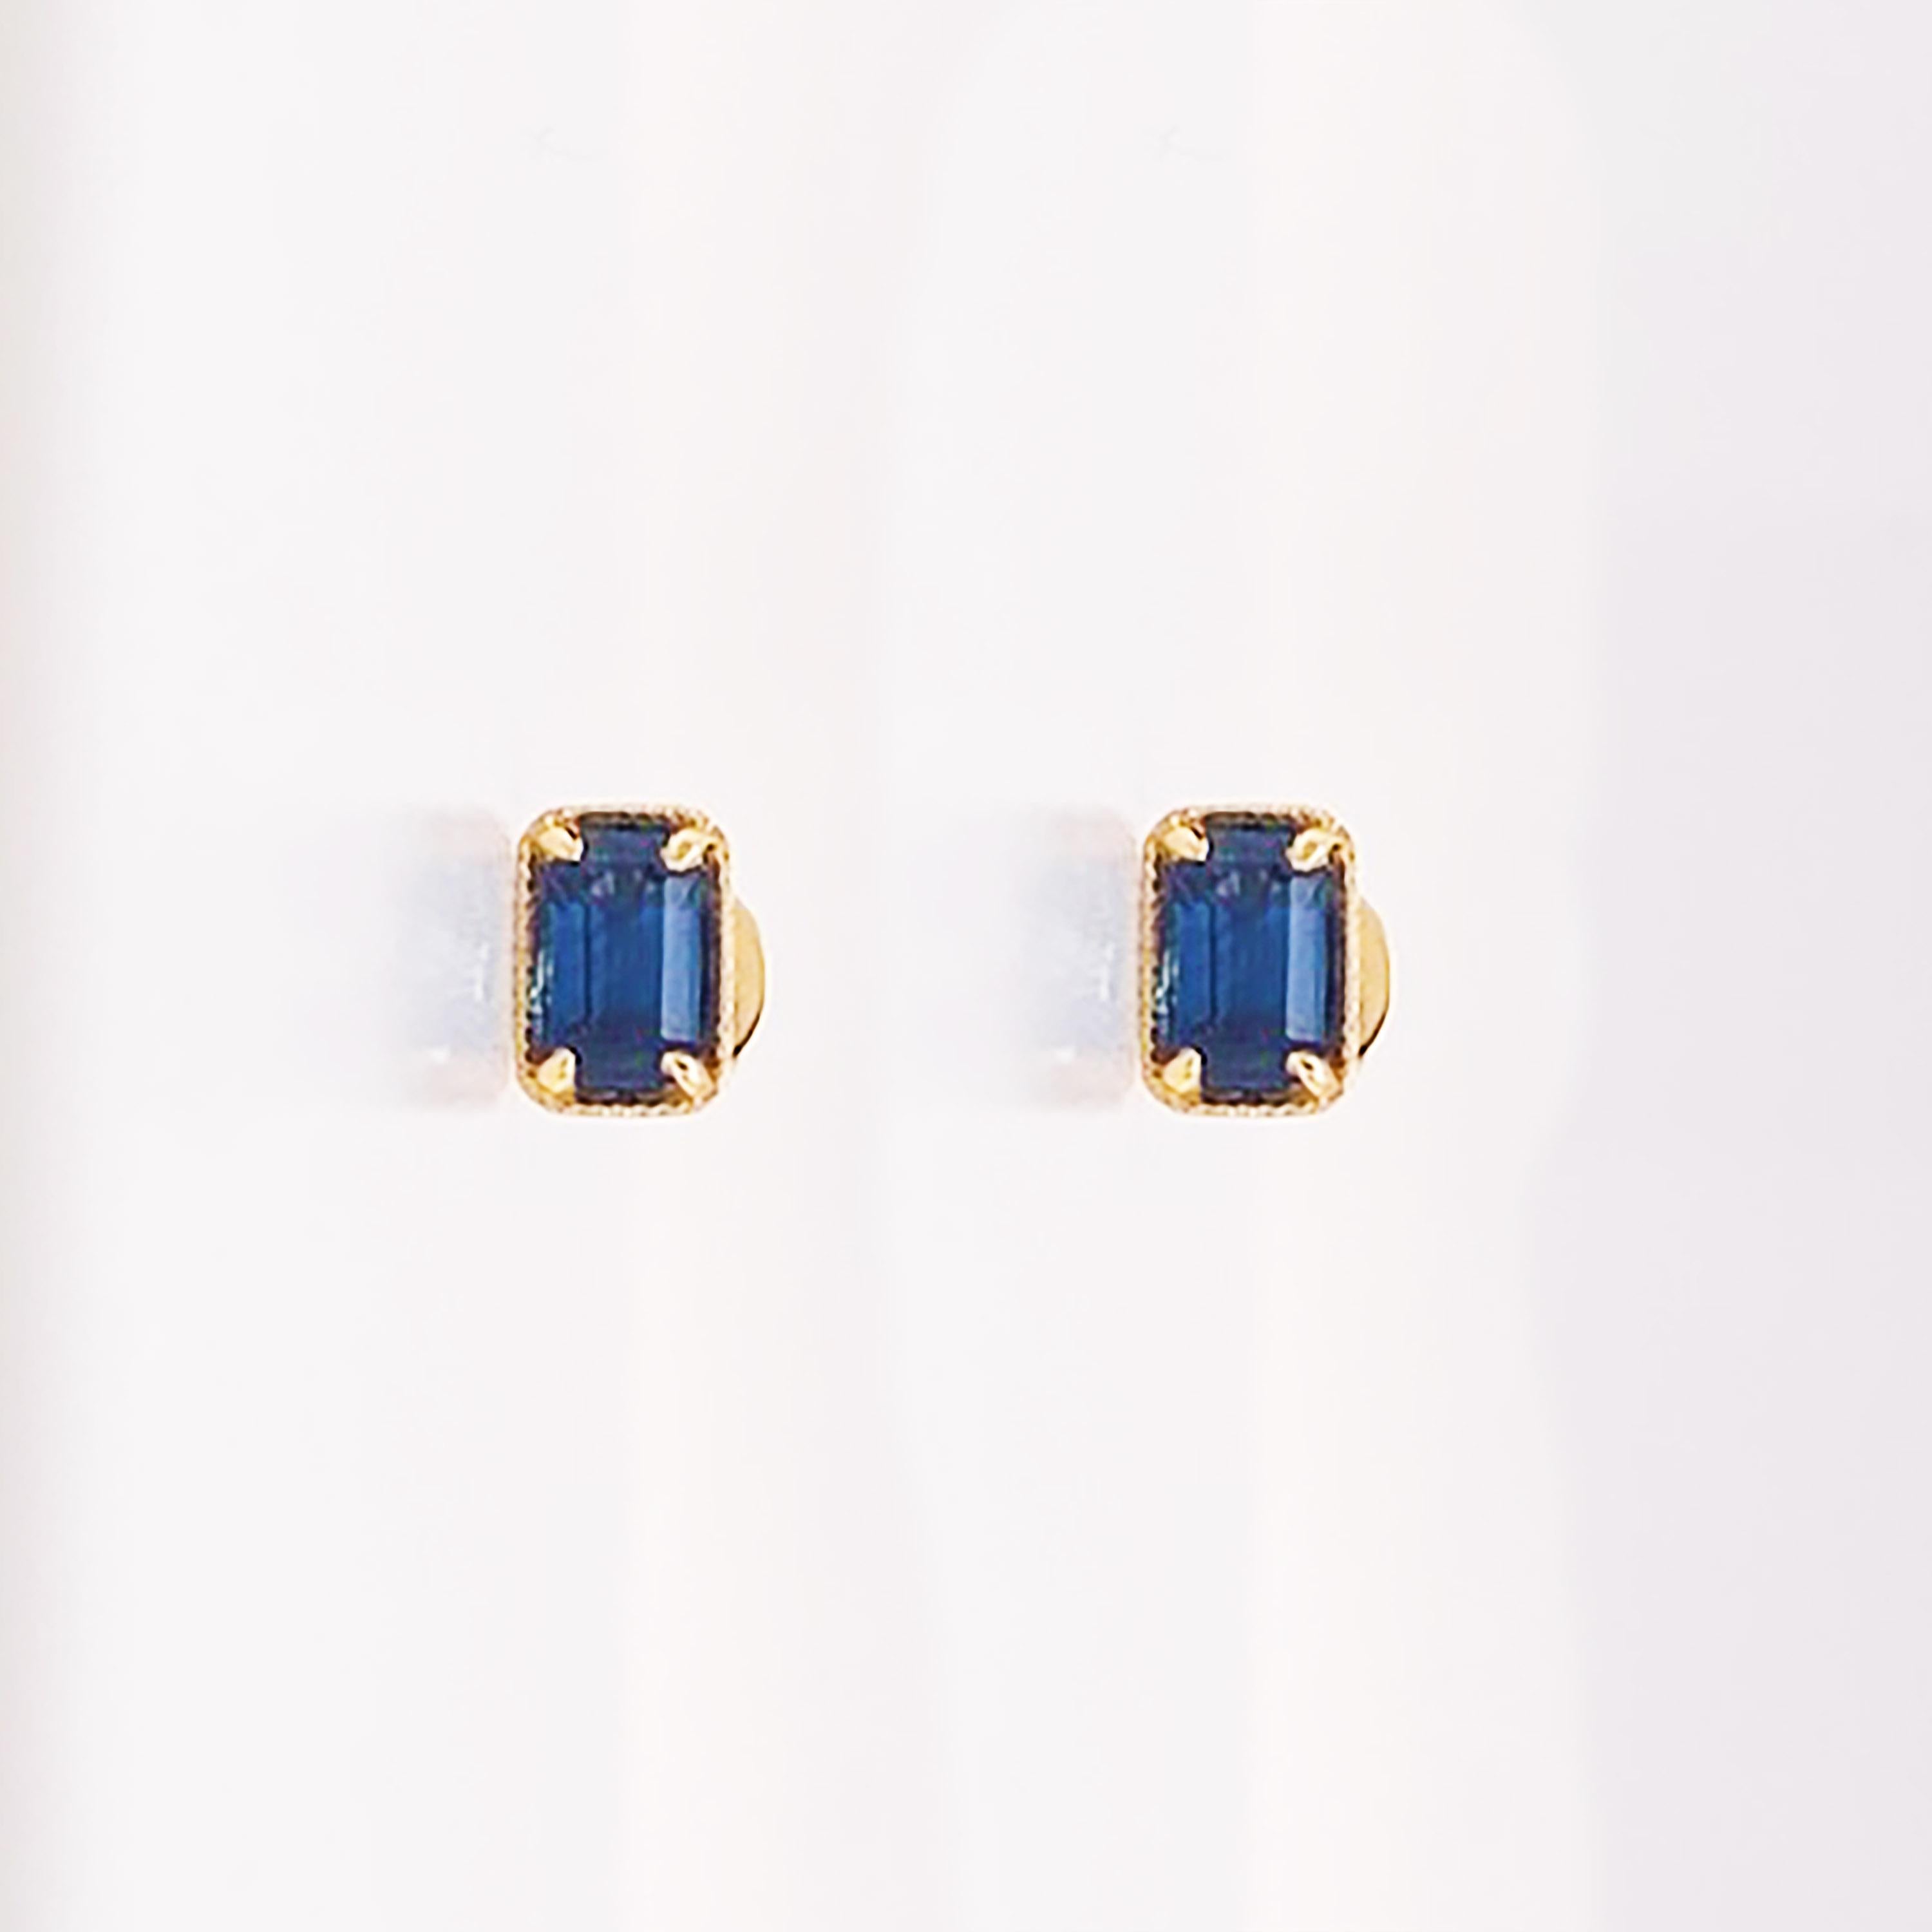 Modern Sapphire Stud Earrings 14K Gold .80 Carat Emerald Cut Sapphire September Earring For Sale